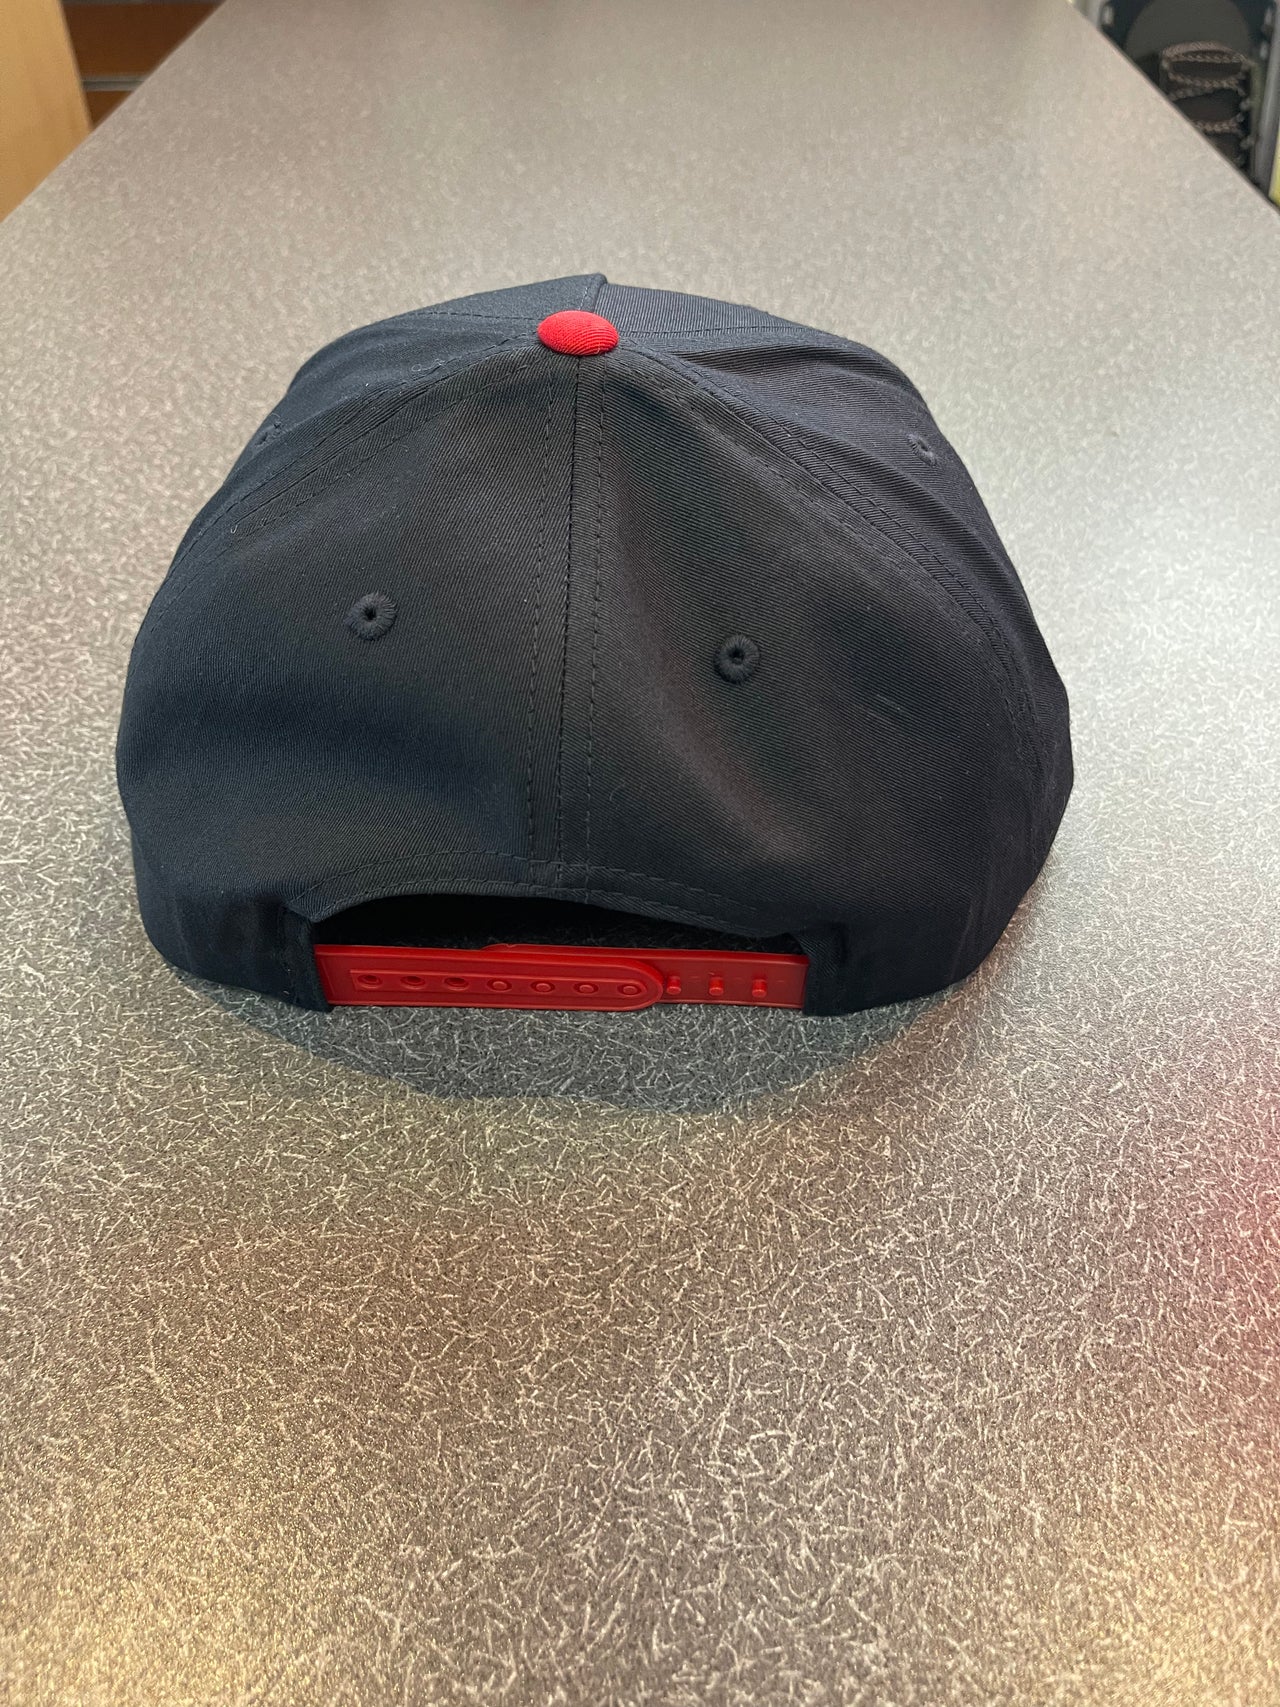 Marine Products Navy/Red Flat Brim Supra Hat